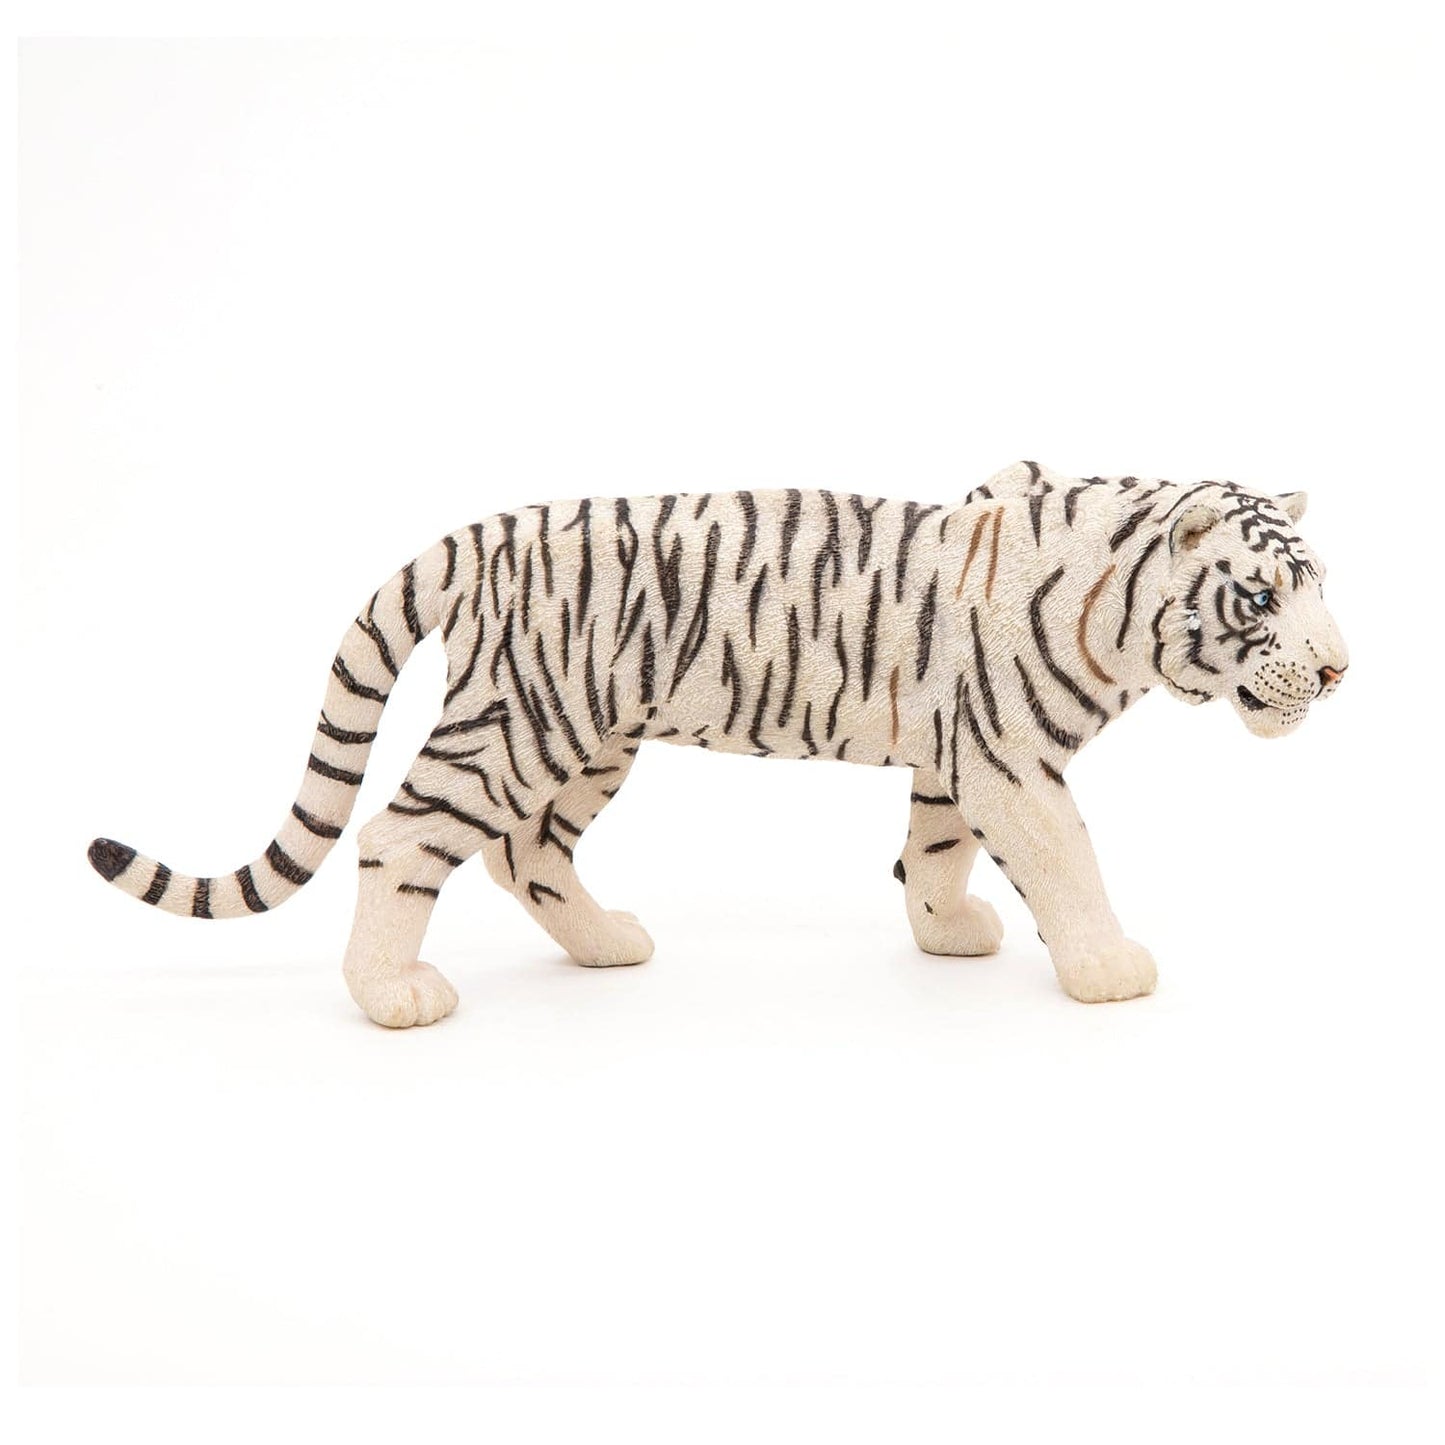 Figurine tigre blanc - Maison Continuum